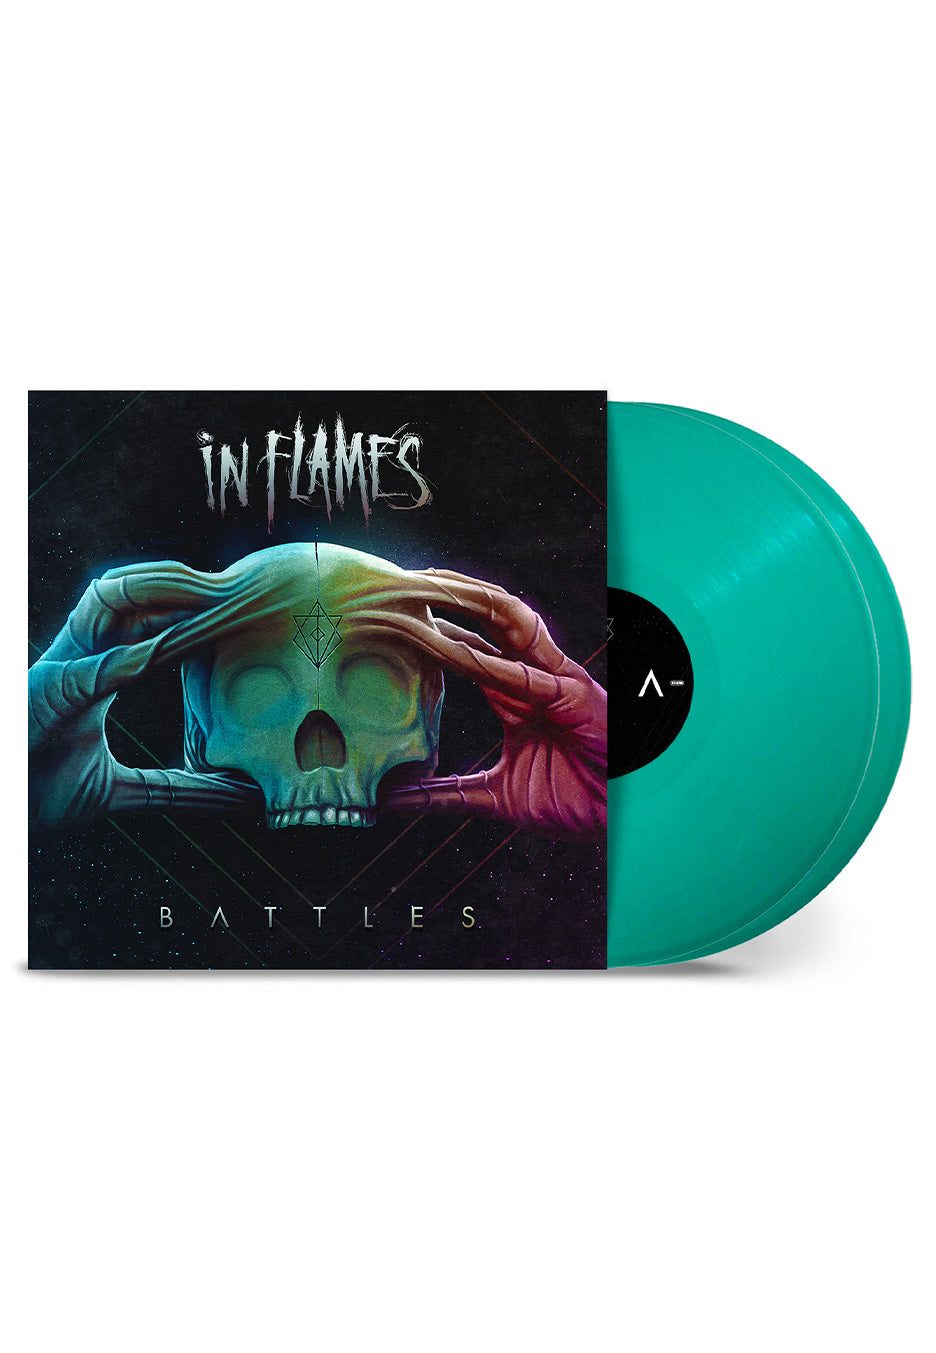 In Flames - Battles Ltd. Curacao - Colored 2 Vinyl